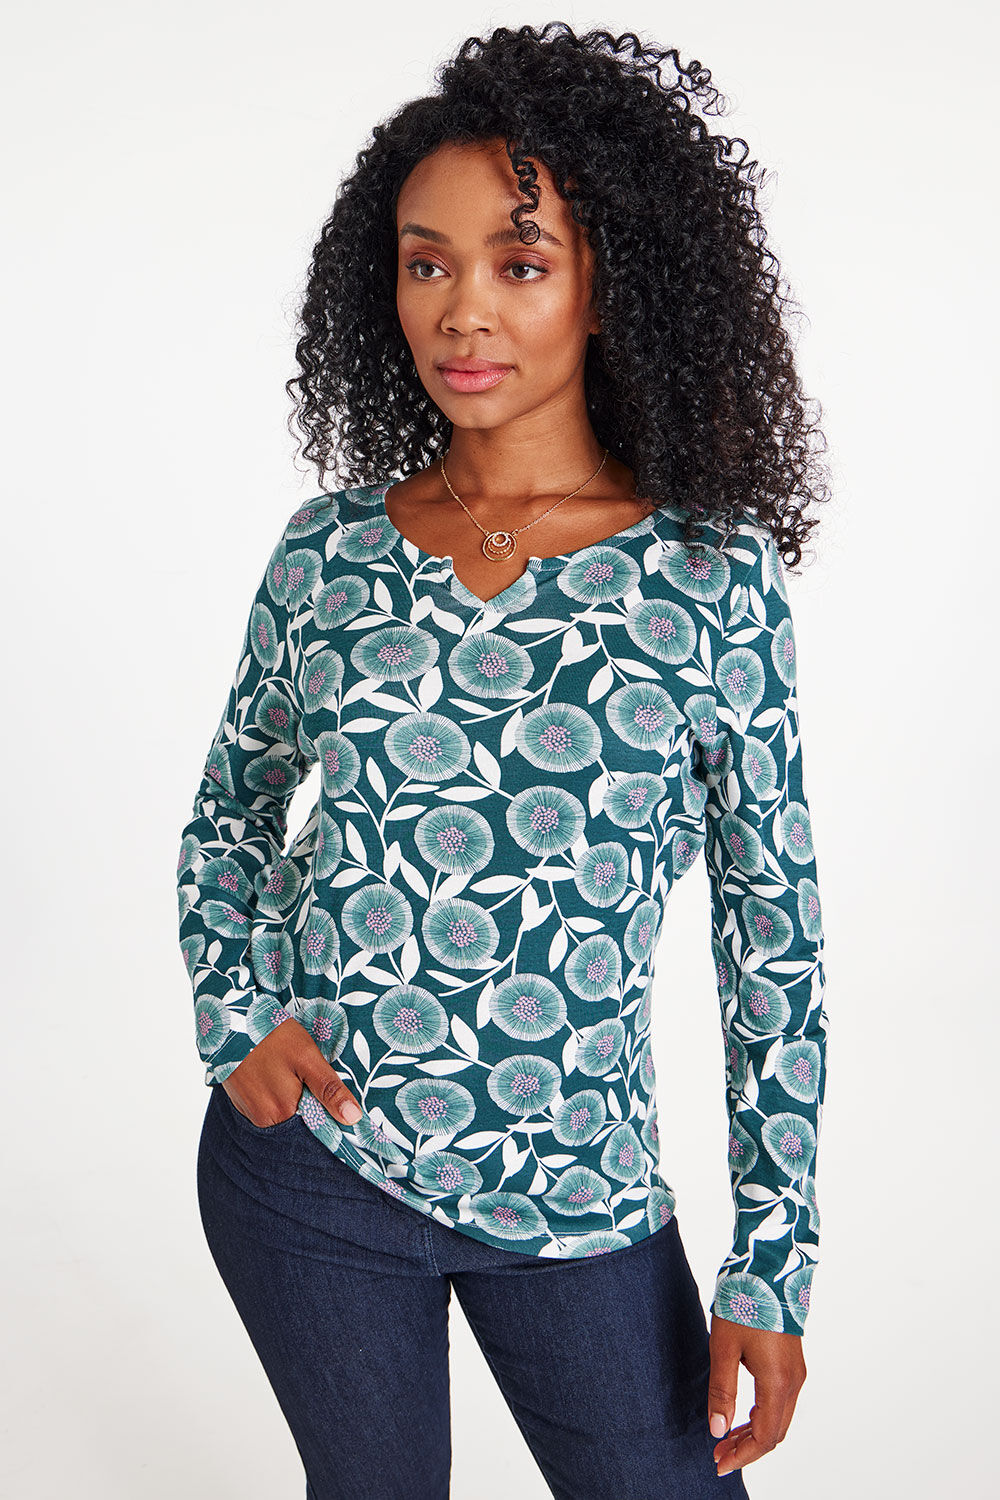 Bonmarche Women’s Green and White Cotton Dandelion Print Long Sleeve Notch Neck T-Shirt, Size: 14